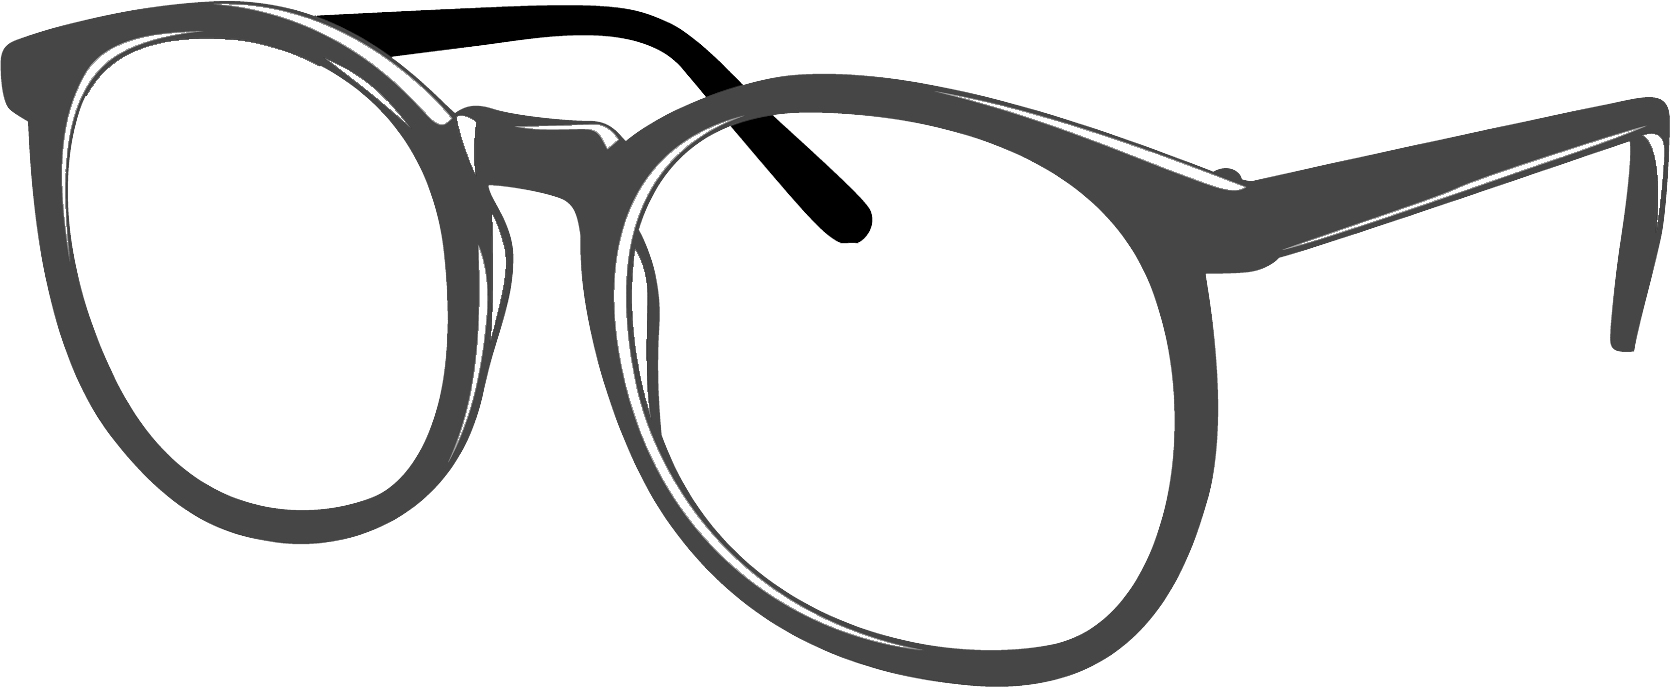 Brille Clipart Kostenlos Eyeglasses Clip Art Free Transparent PNG ...